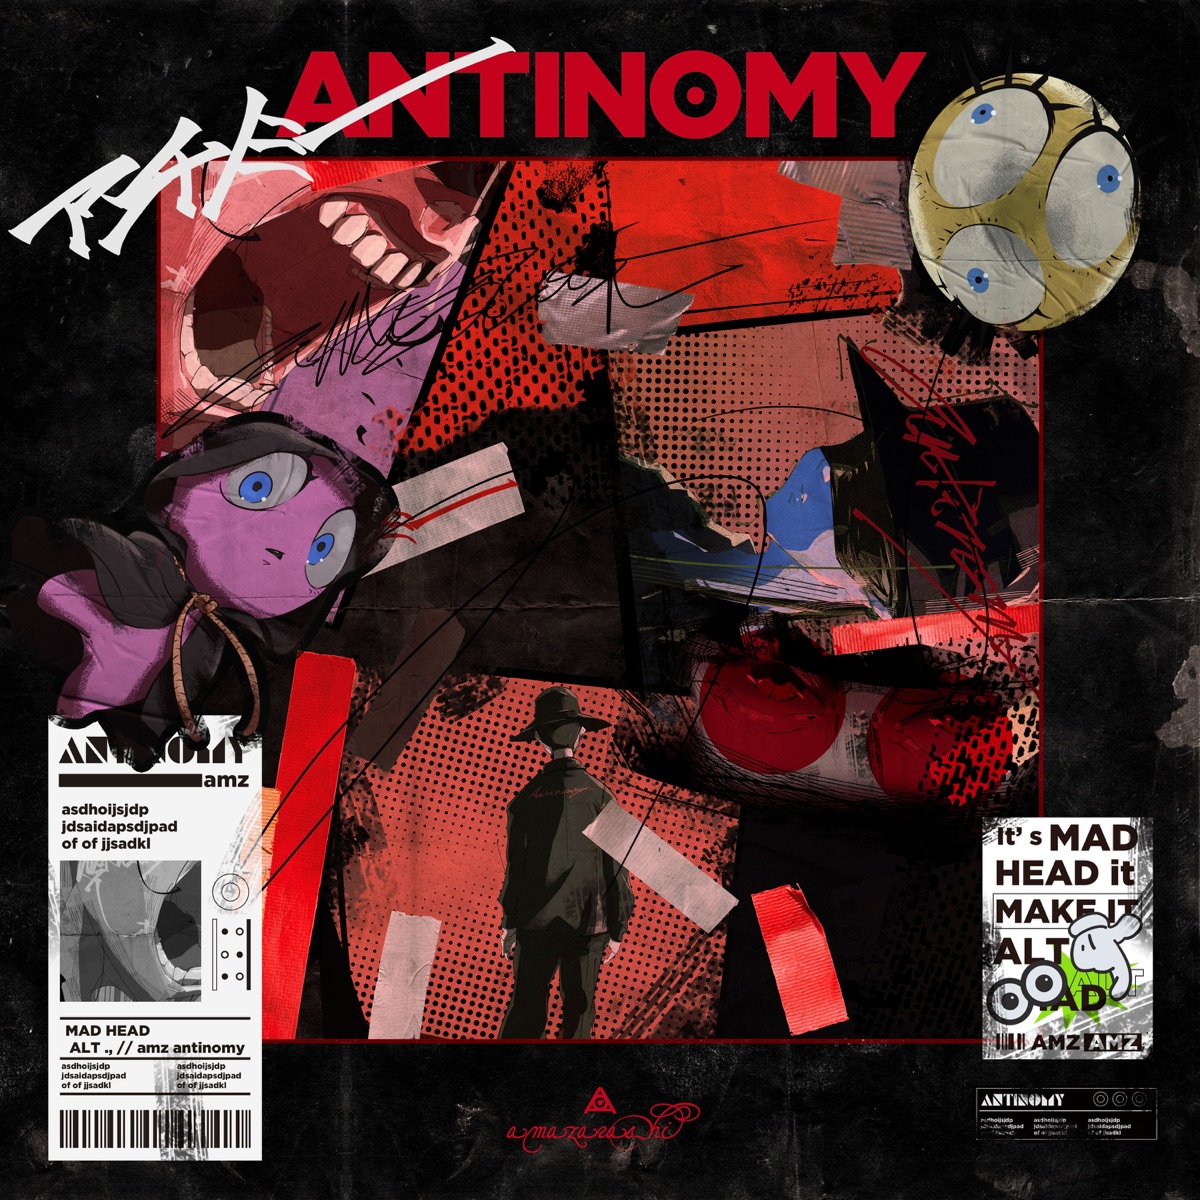 Cover art for『amazarashi - antinomy』from the release『antinomy』